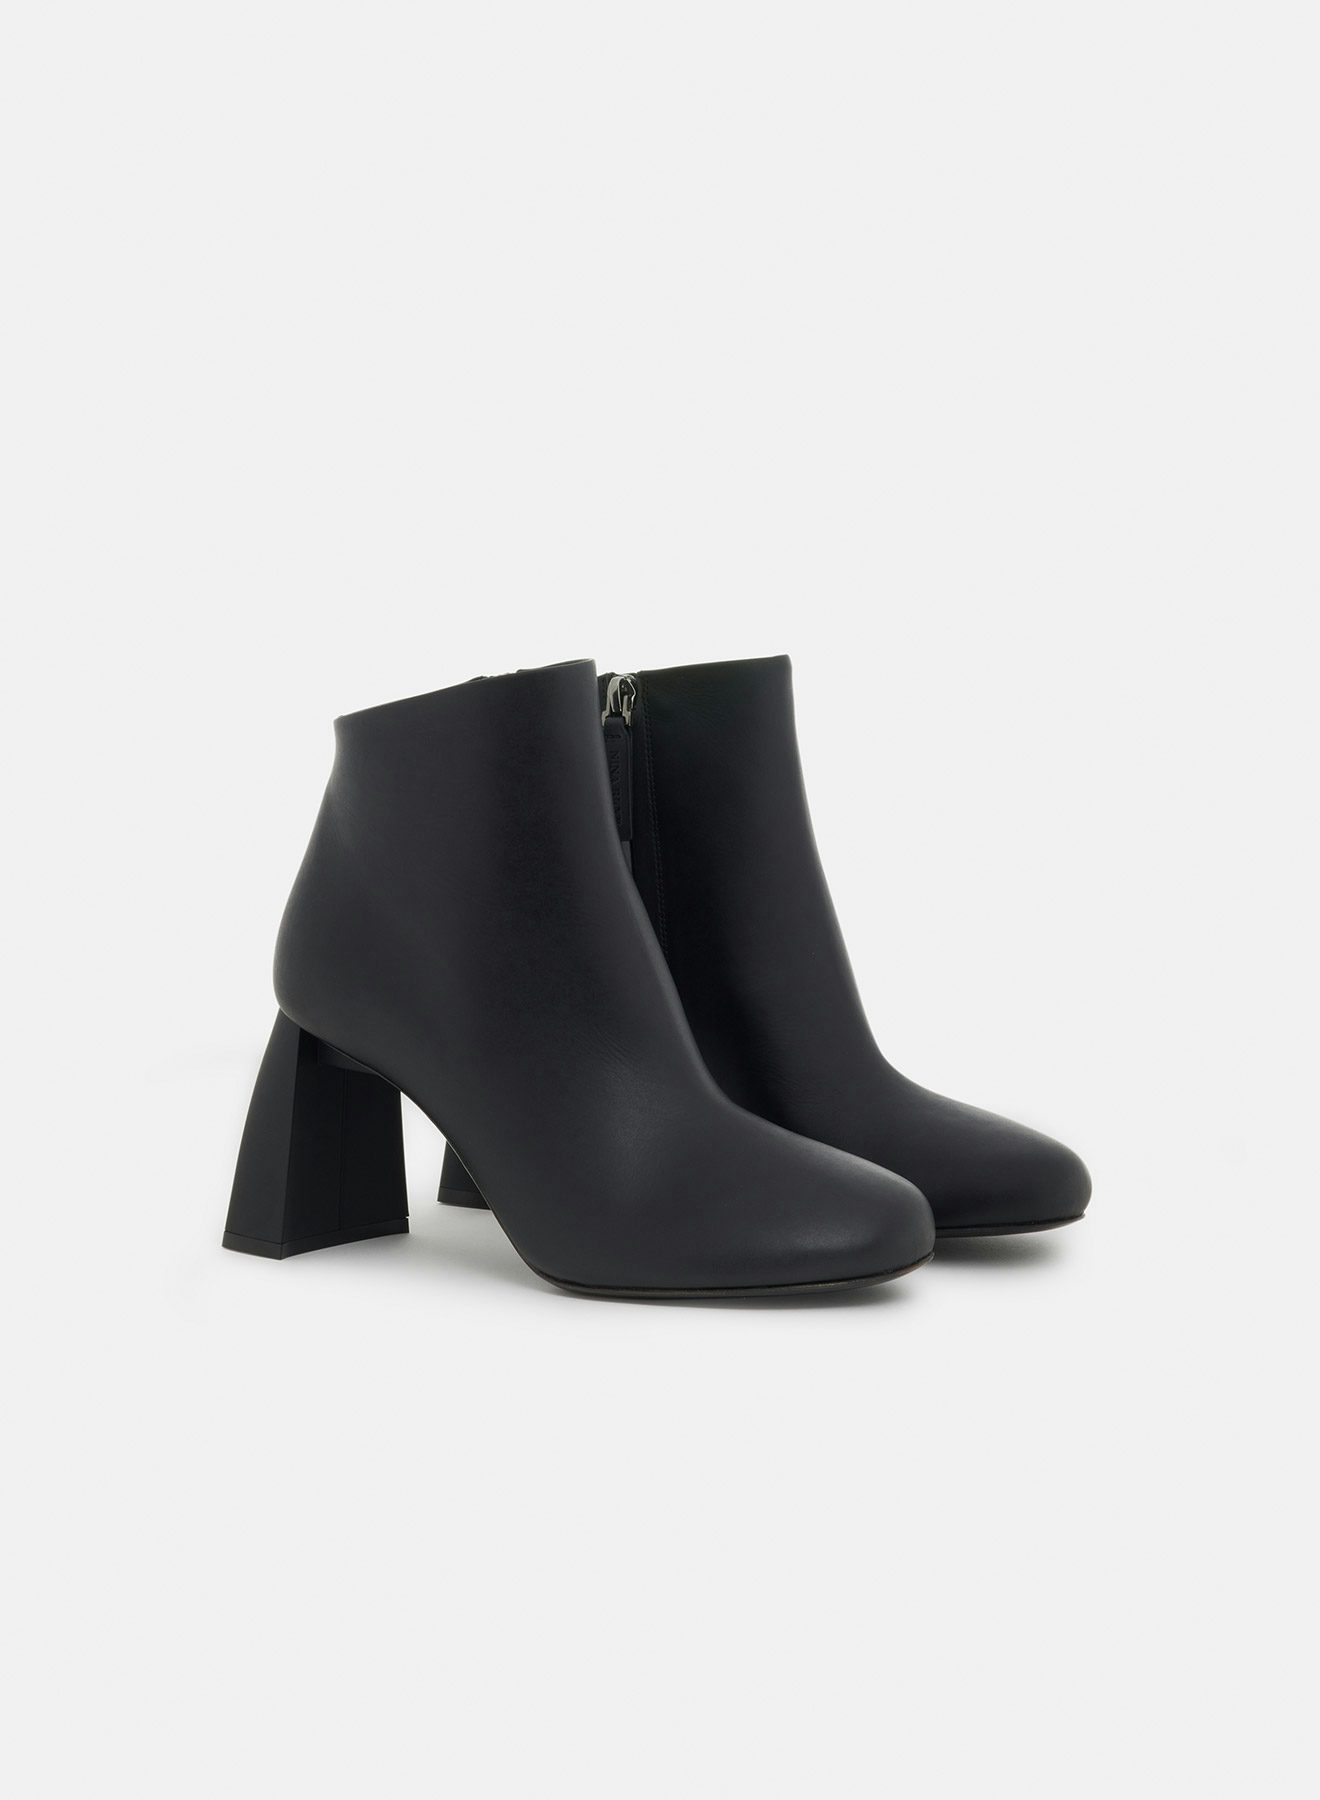 Calf leather ankle boots black - Nina Ricci